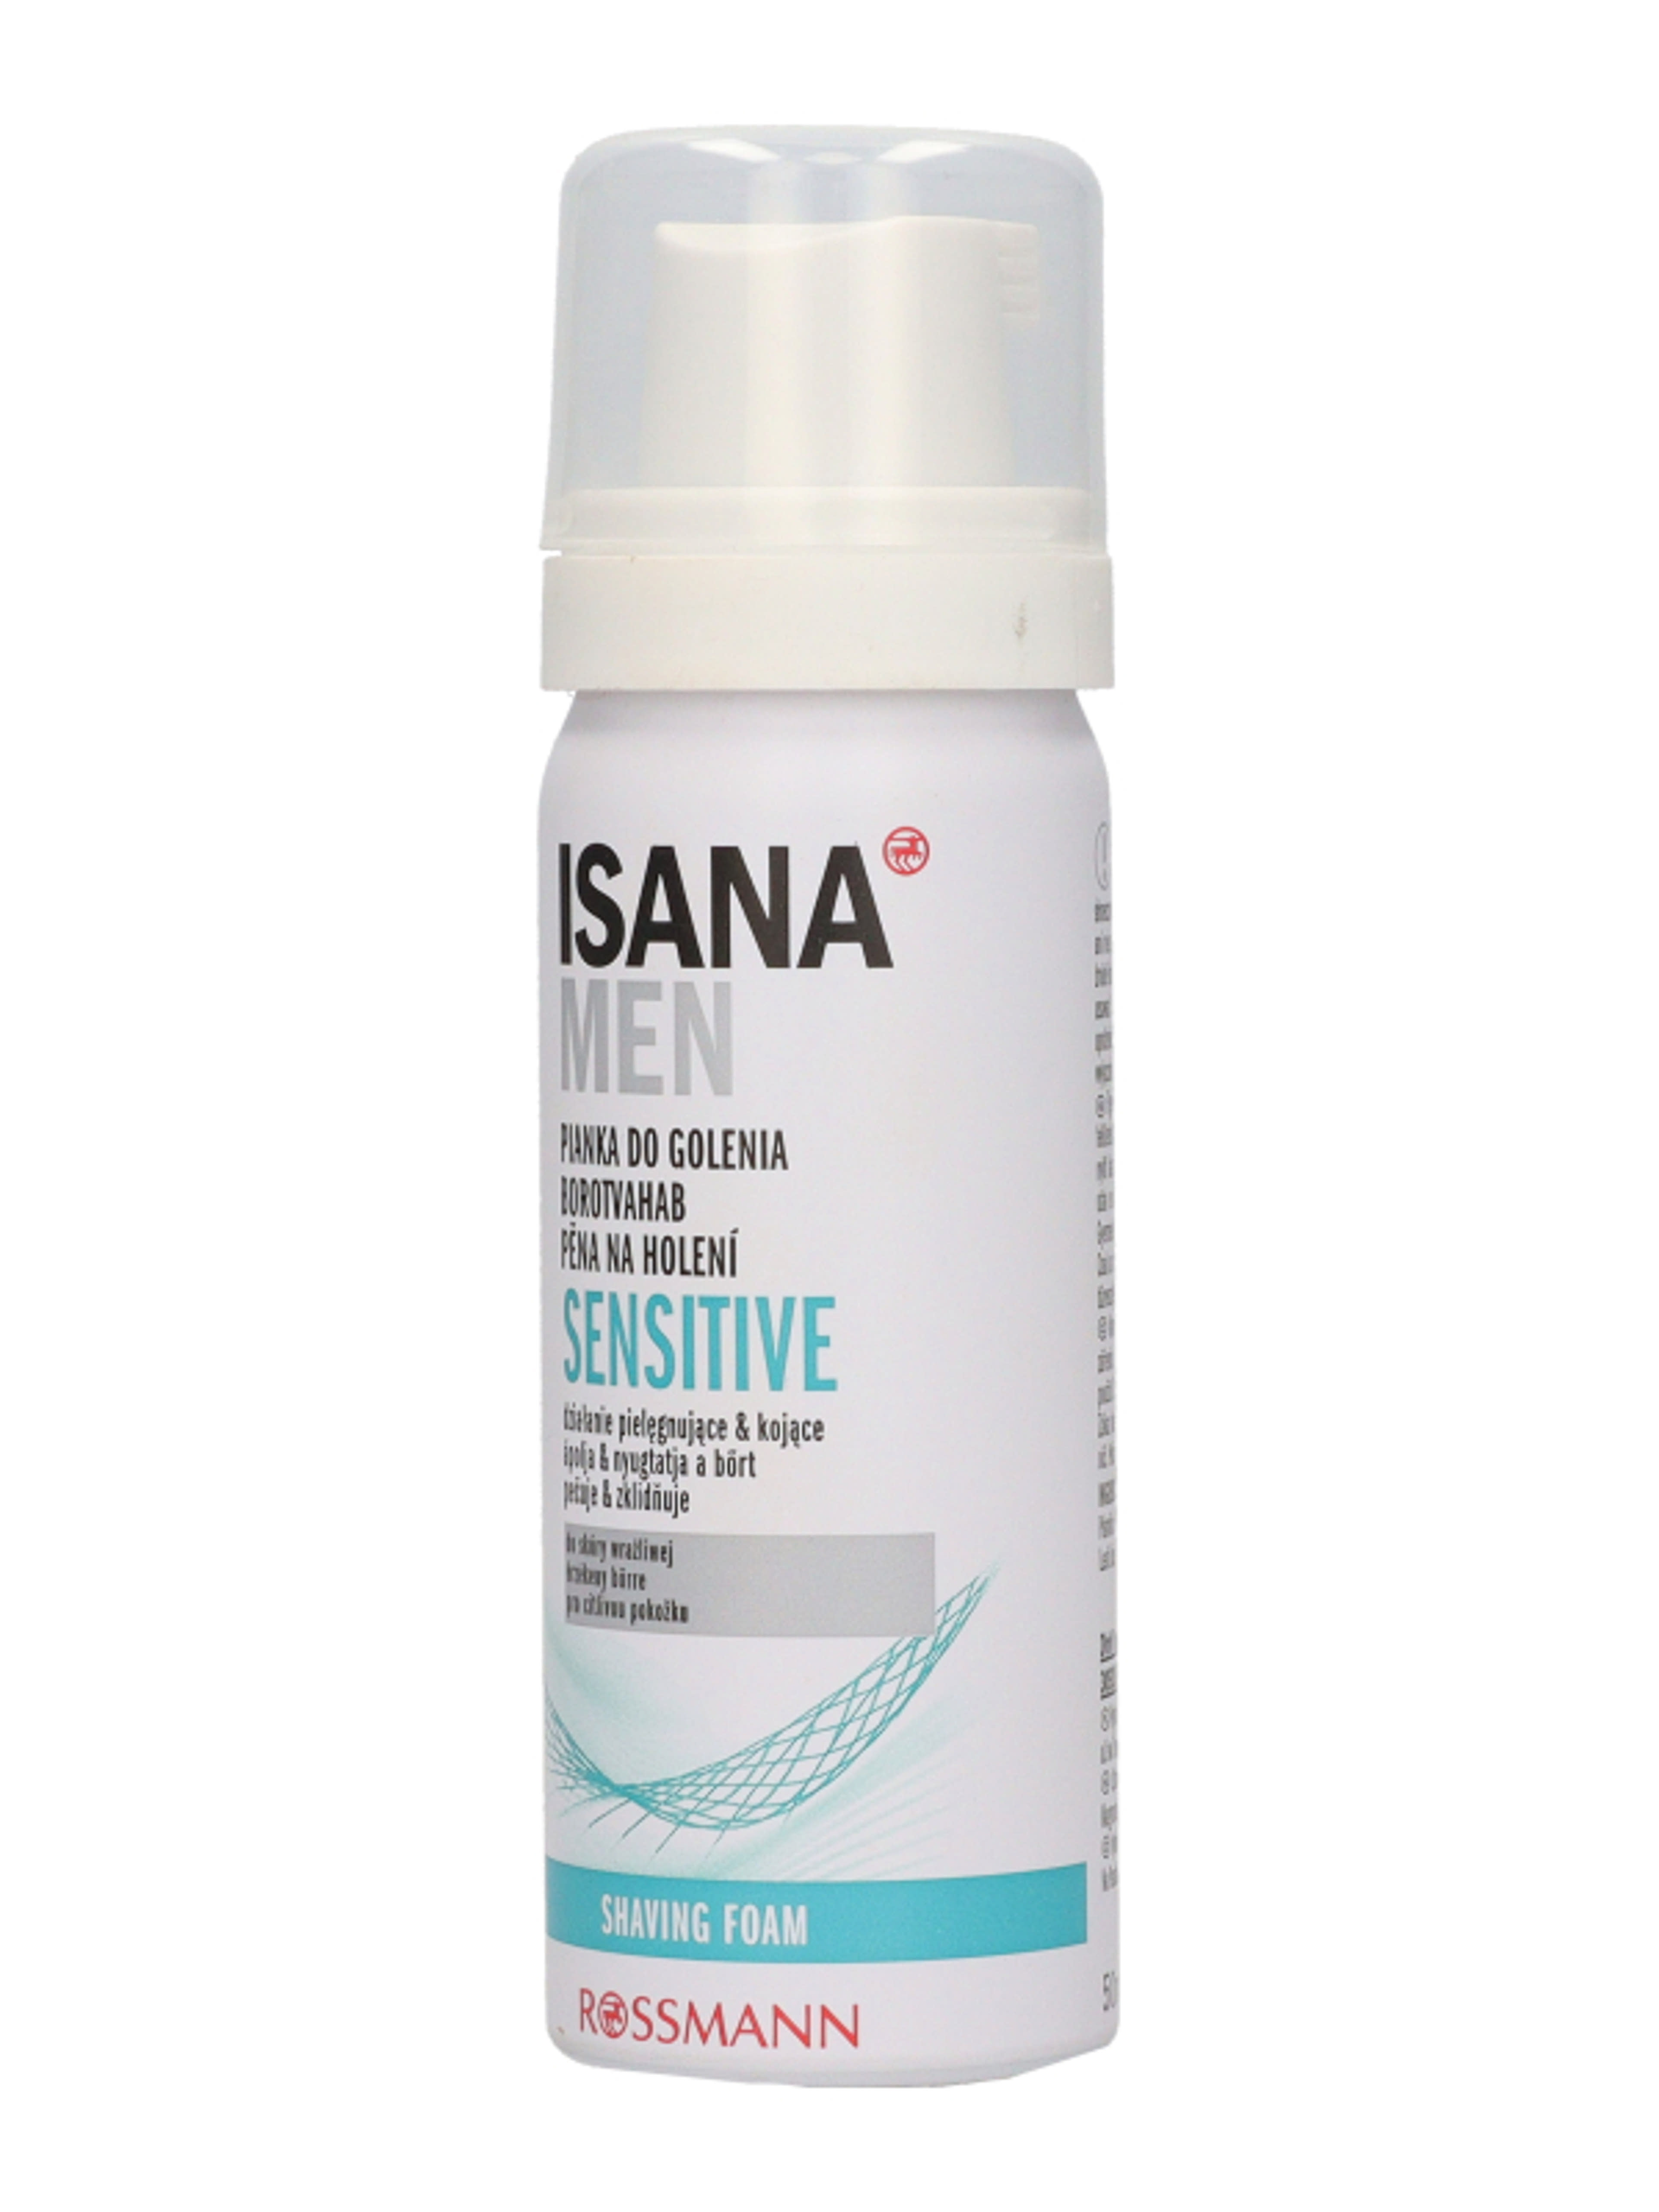 Isana Men Sensitive borotvahab - 50 ml-4